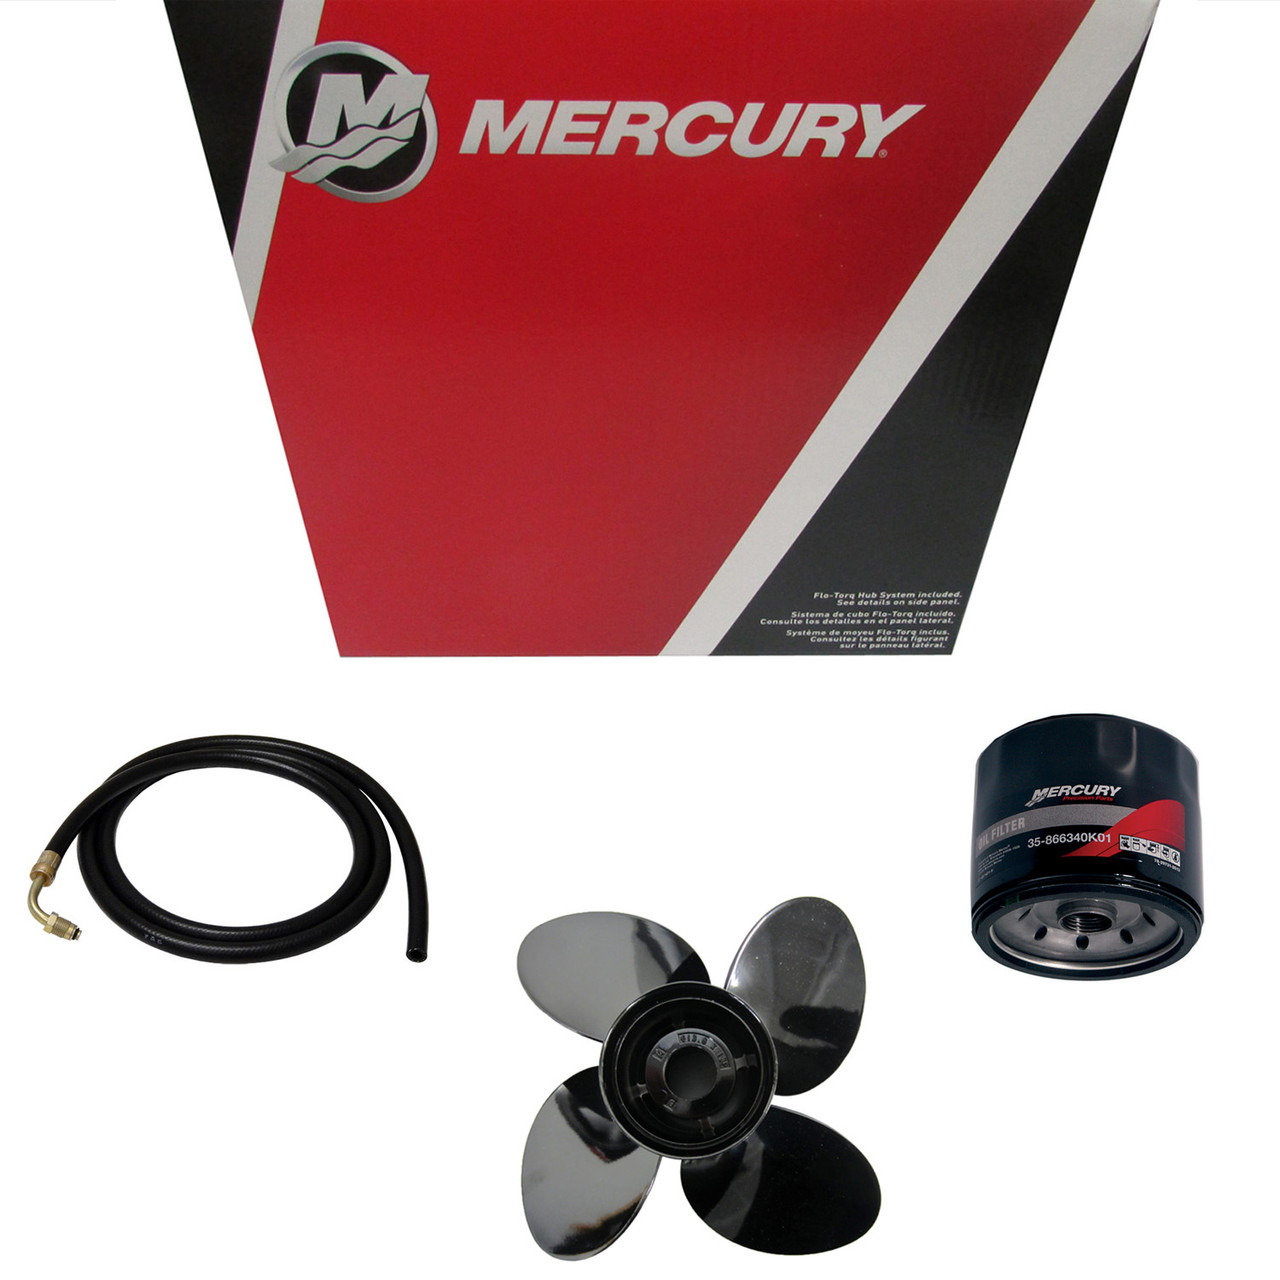 Mercury Marine / Mercruiser New OEM Gear Set, 43-880709A03